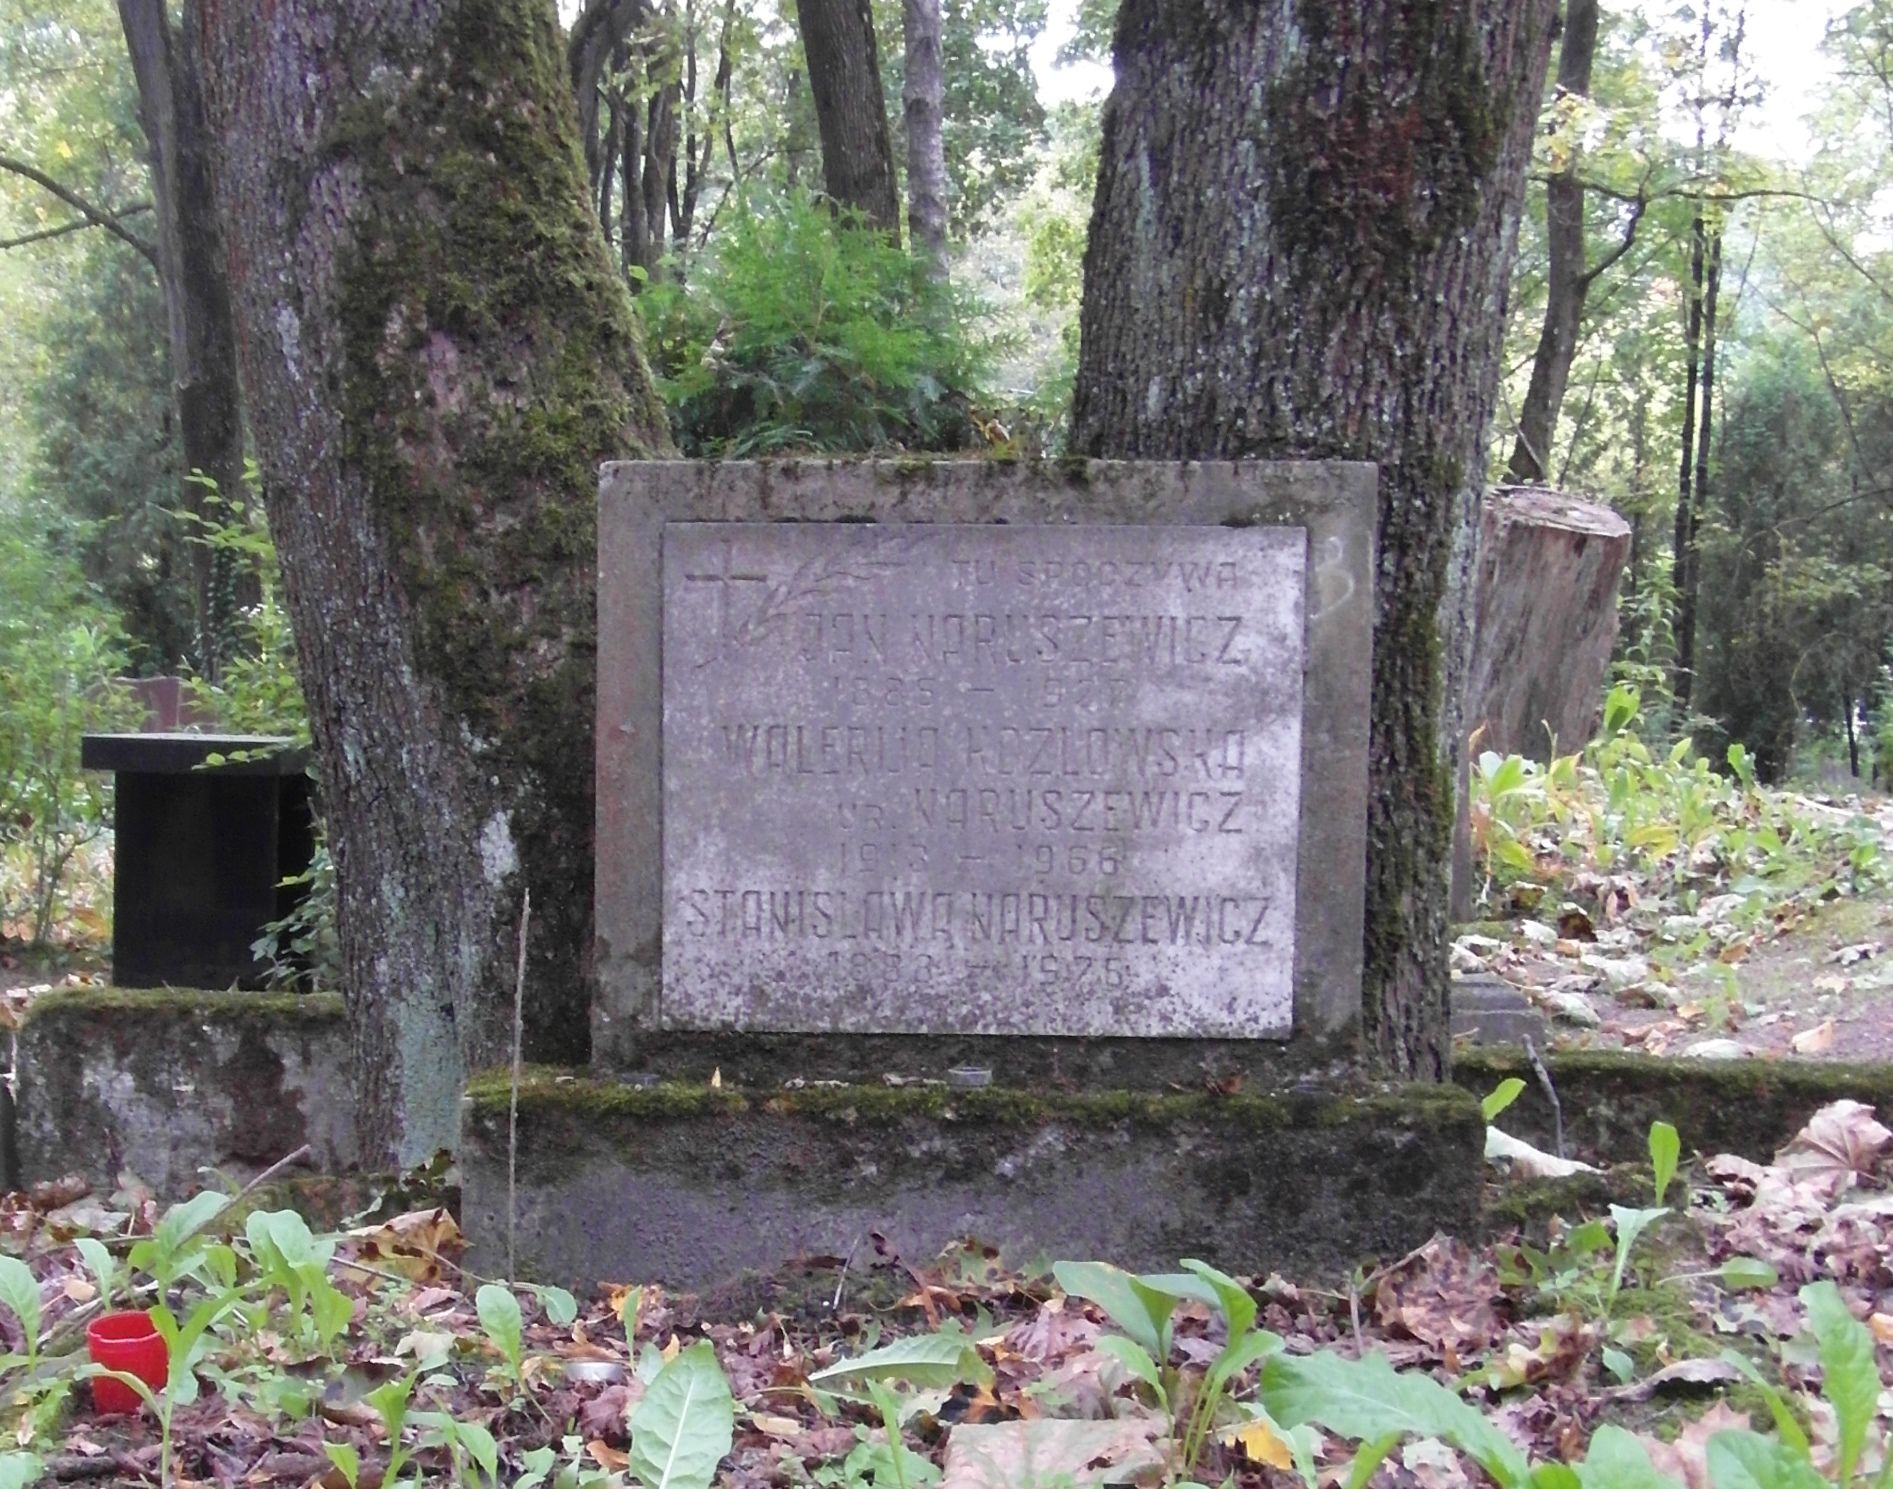 Inscription from the tombstone of Jan, Stanislaw Narushevich, Valerja Kozlowska, St Michael's cemetery in Riga, as of 2021.